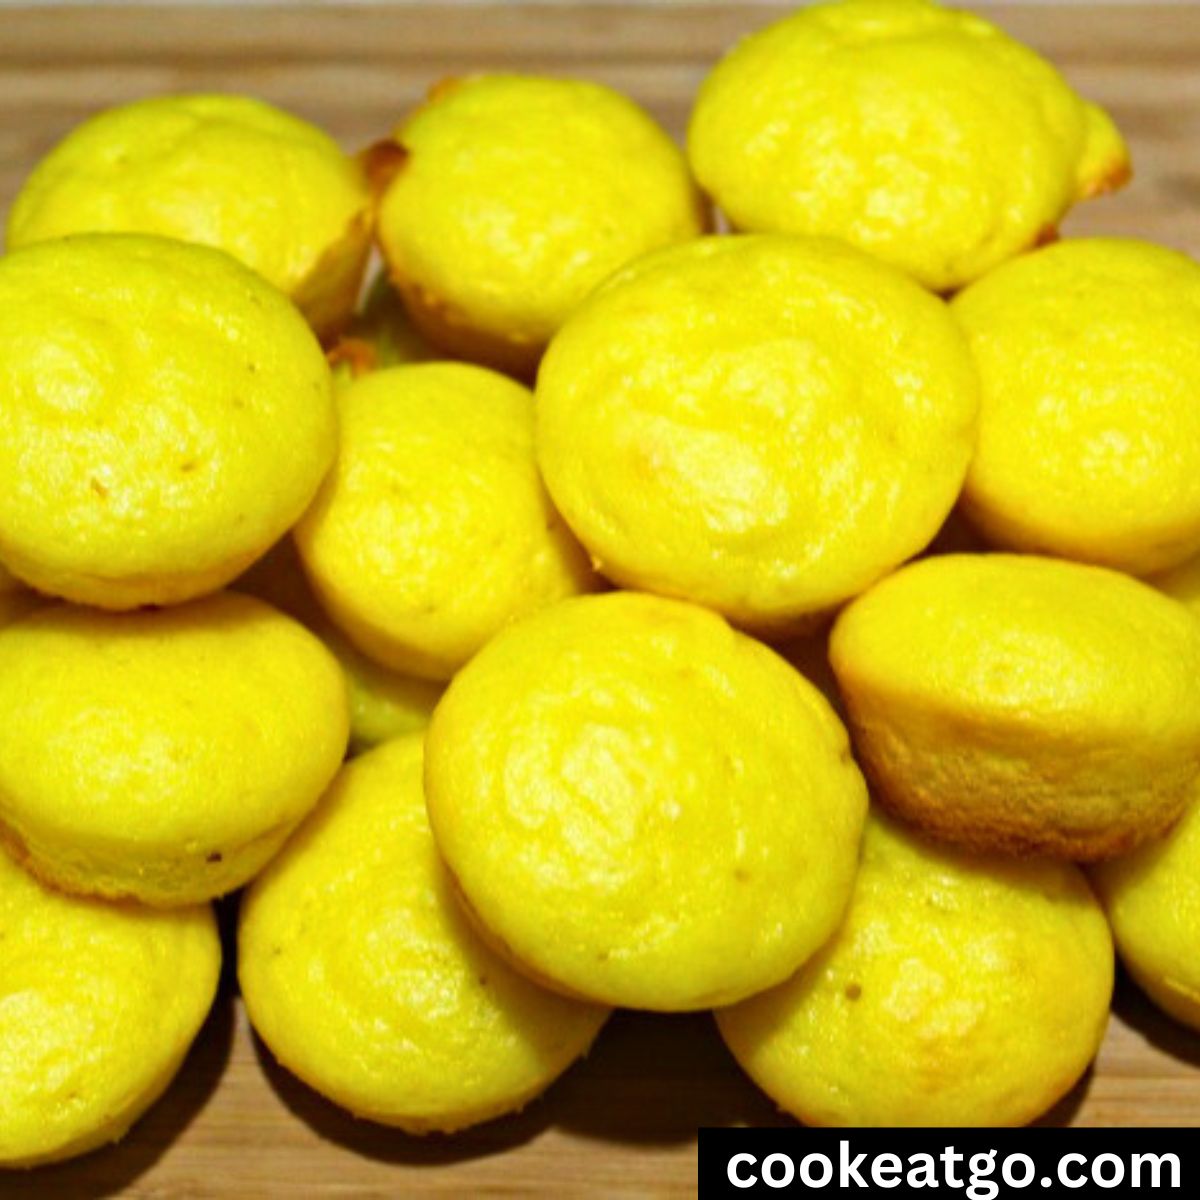 Weight Watchers Lemon Muffins piled on a cutting board